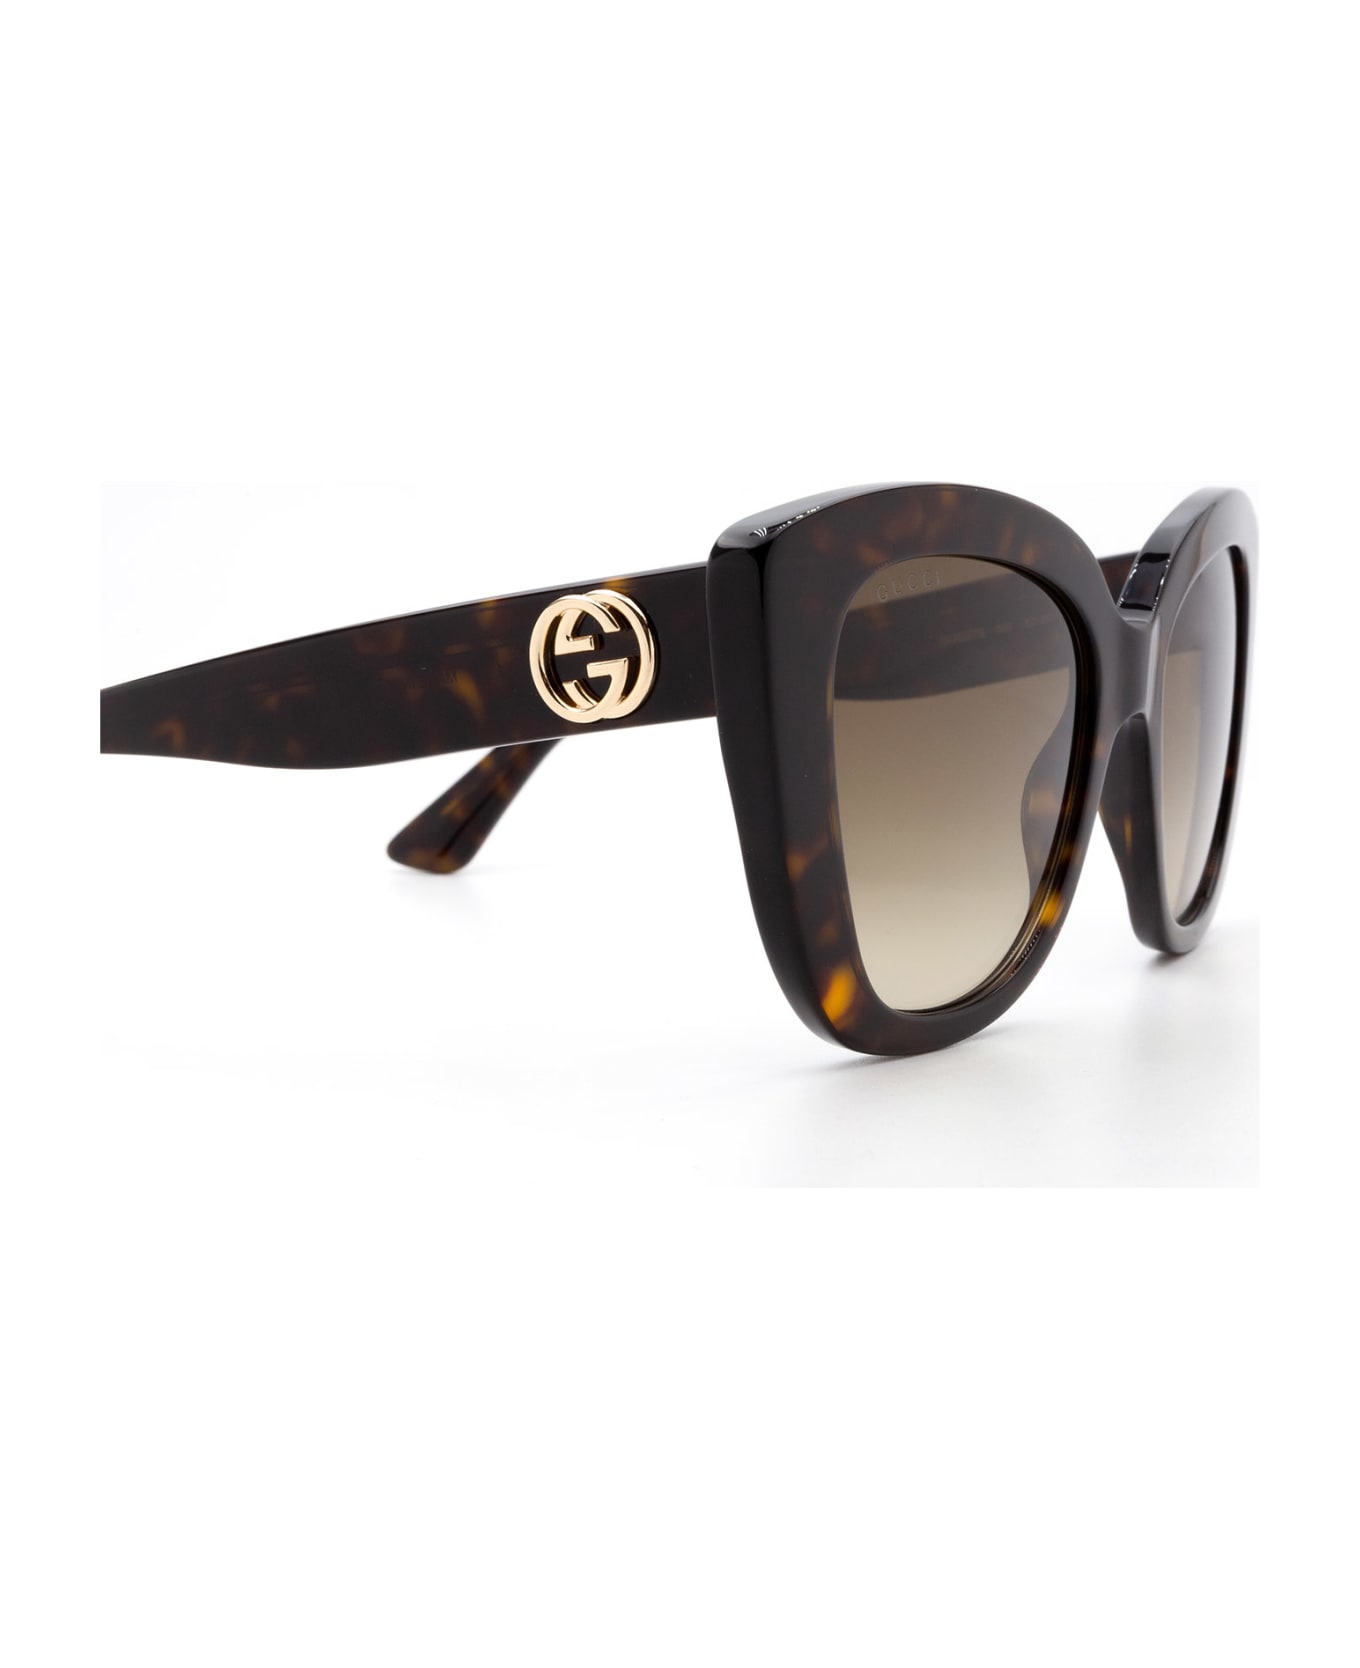 Gucci Eyewear Gg0327s Havana Sunglasses - Havana